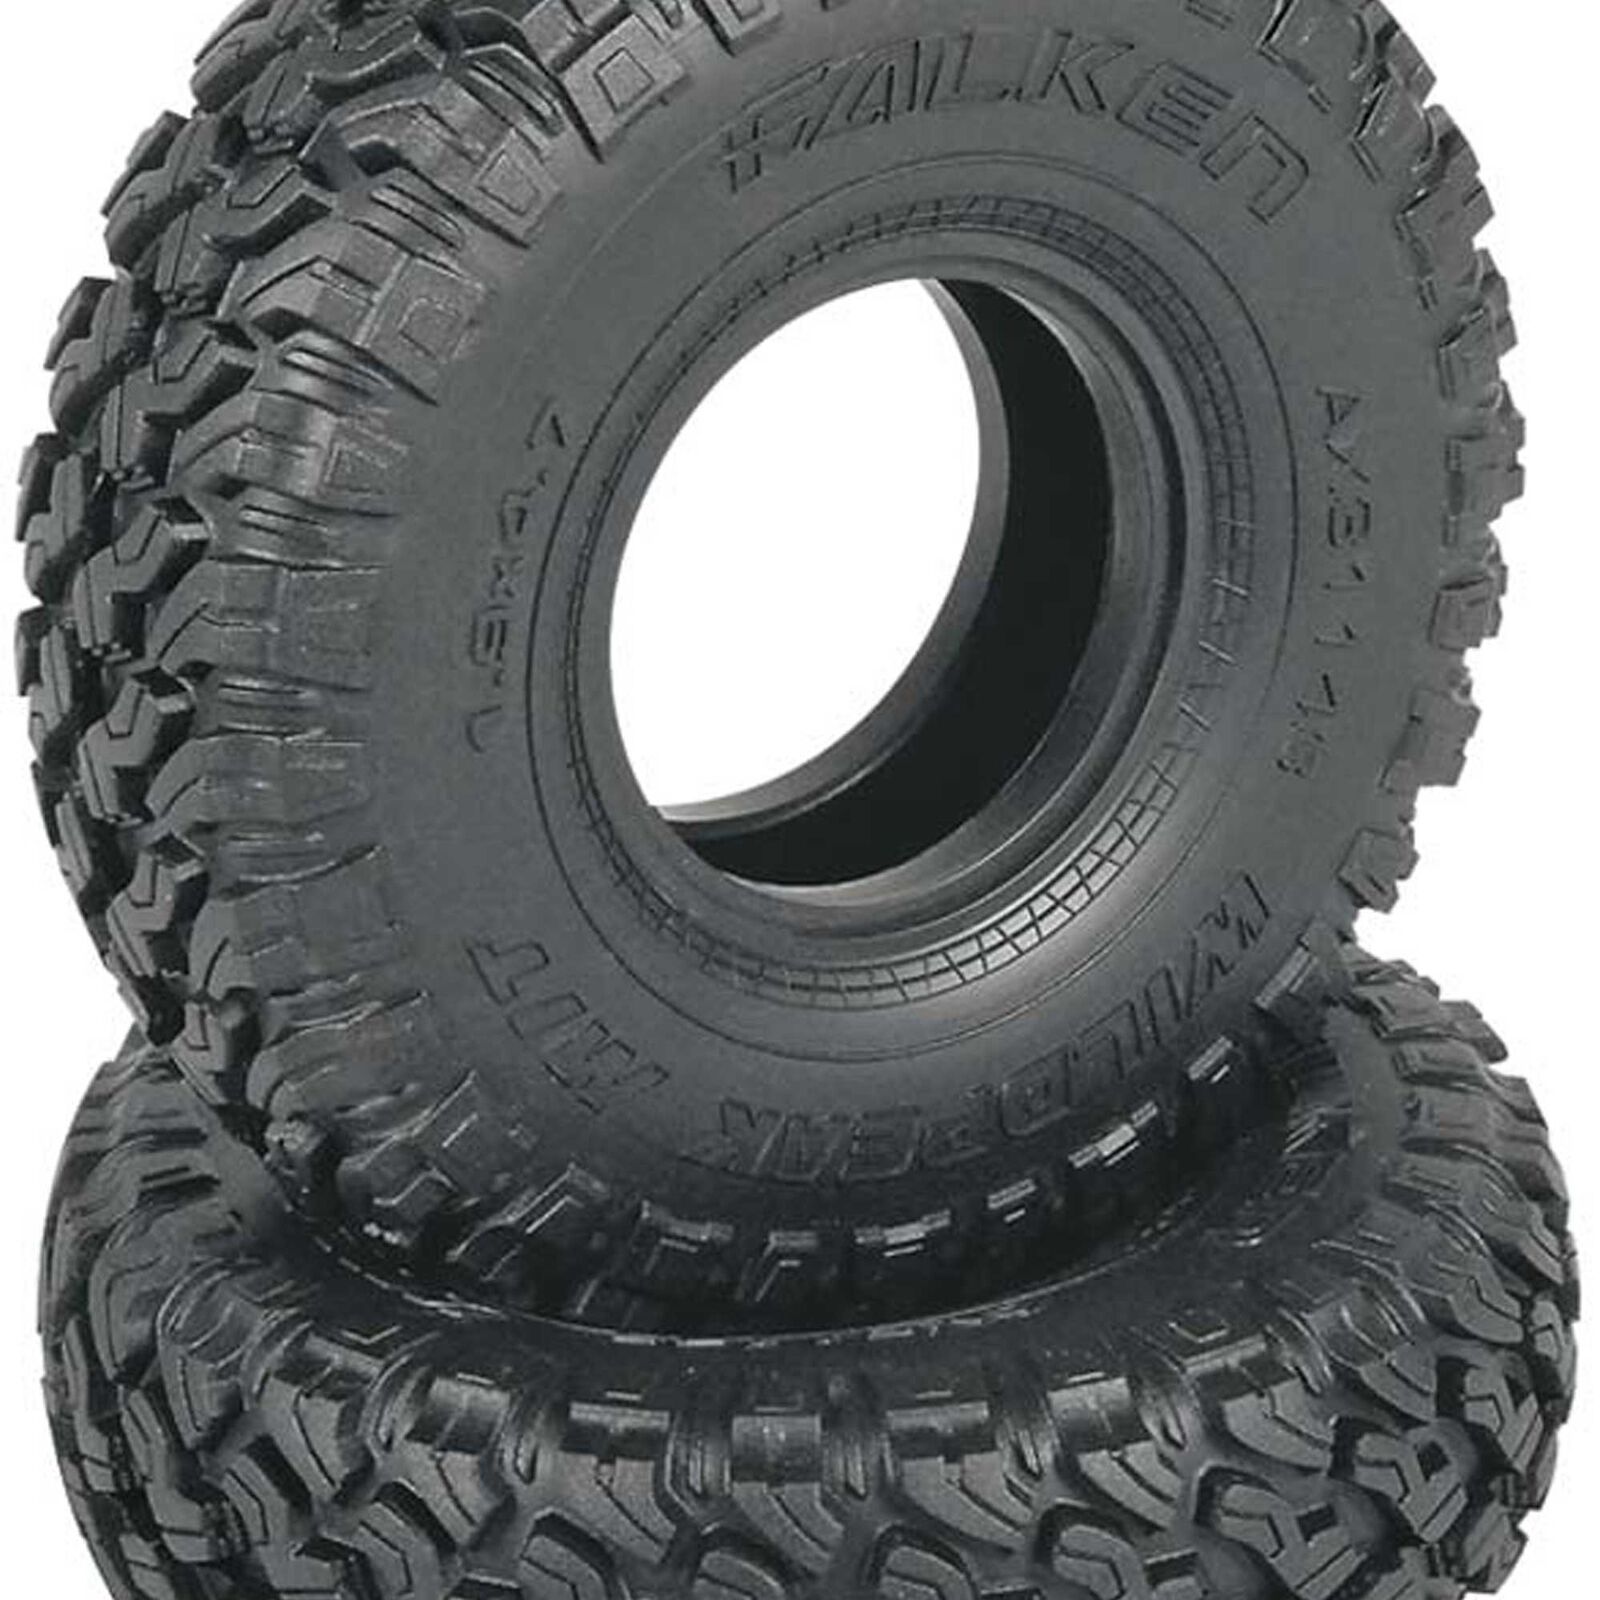 1/10 Falken Wildpeak R35 1.9 Tire with Inserts (2)